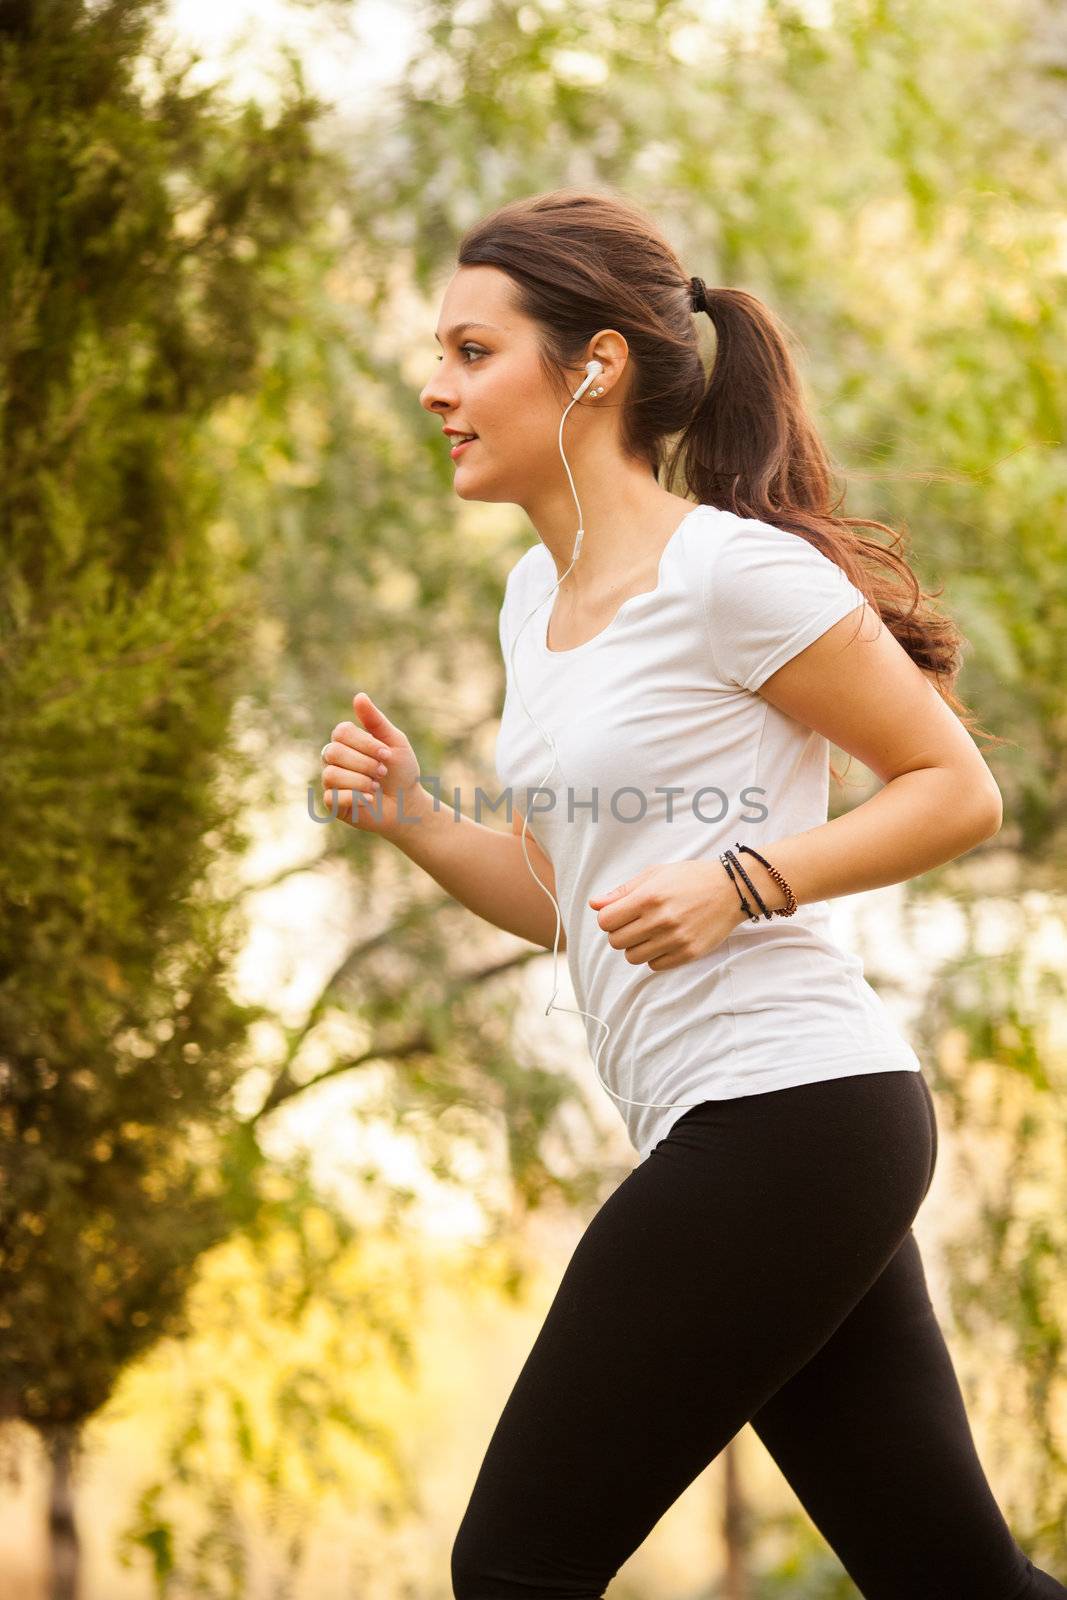 young beautiful woman jogging outdoors